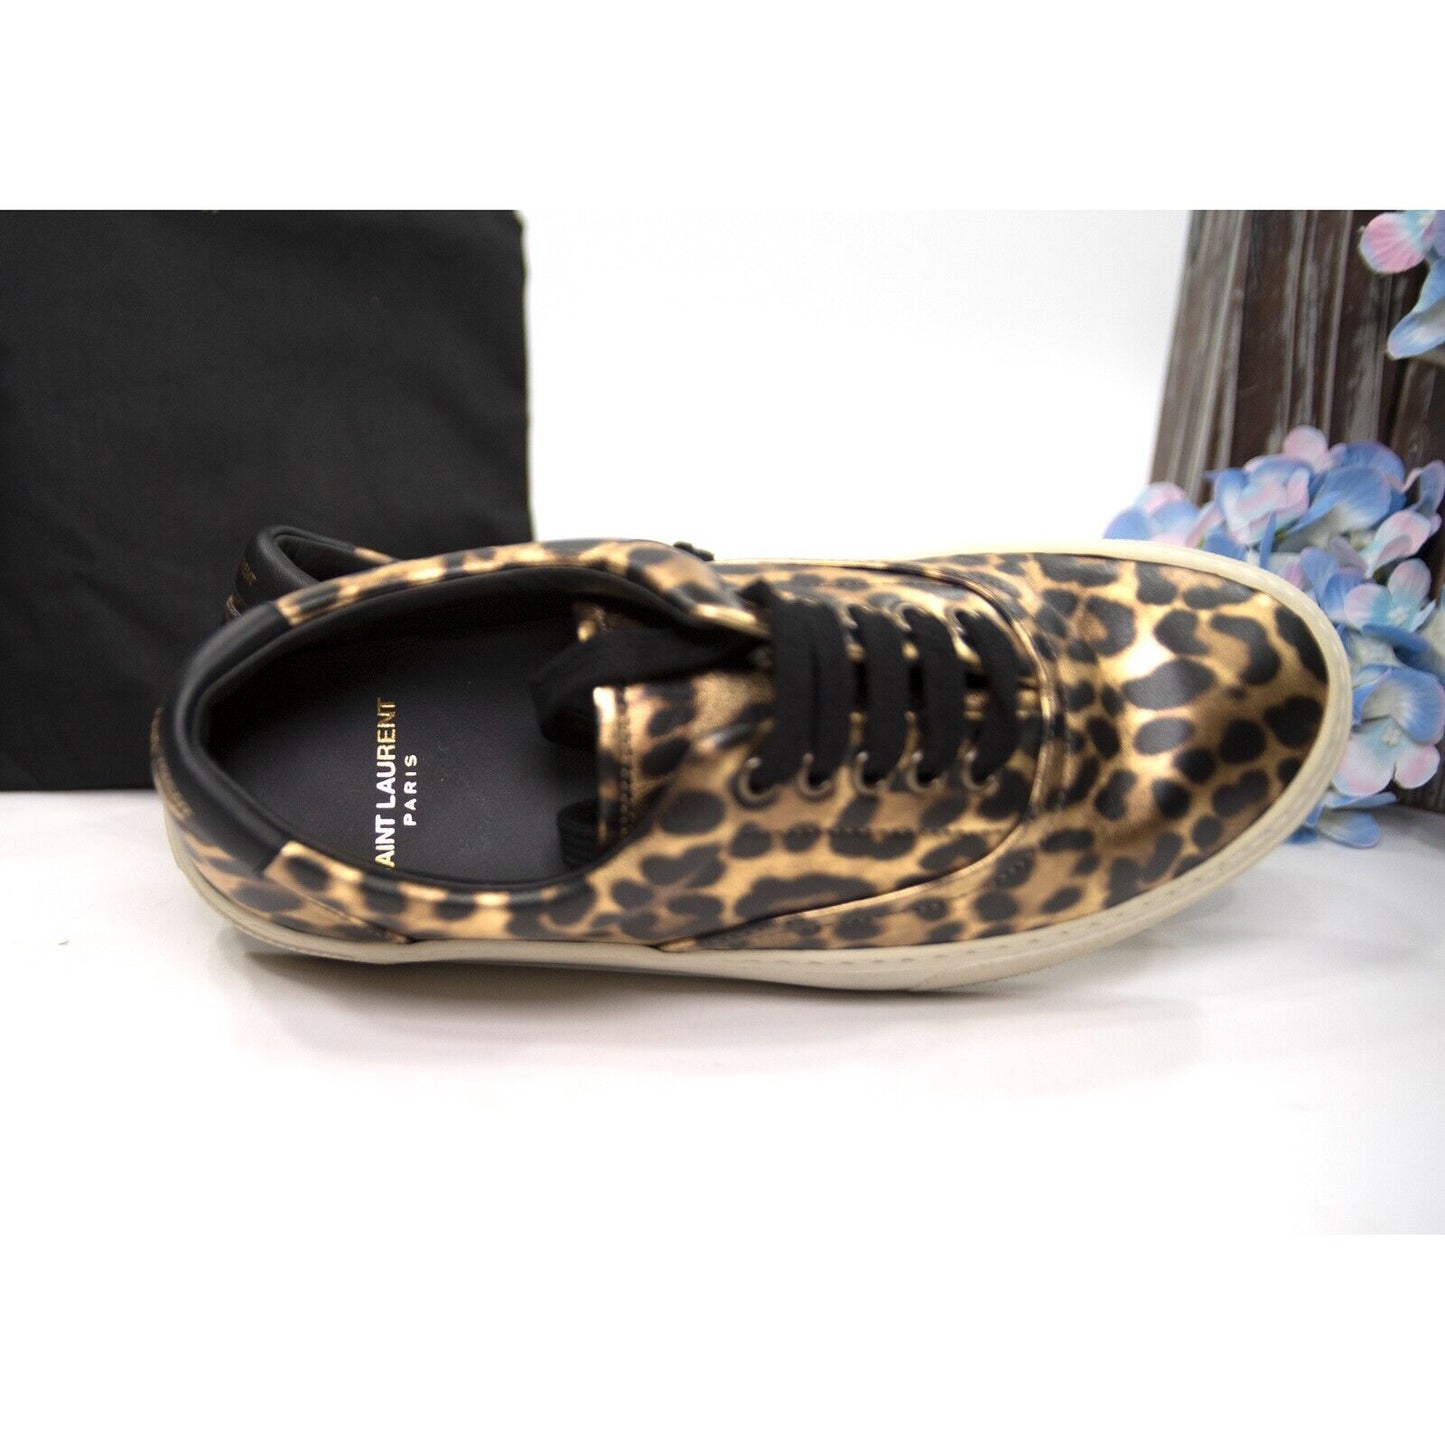 Saint Laurent Venice Black Gold Metallic Leather Leopard Sneakers 37 NIB